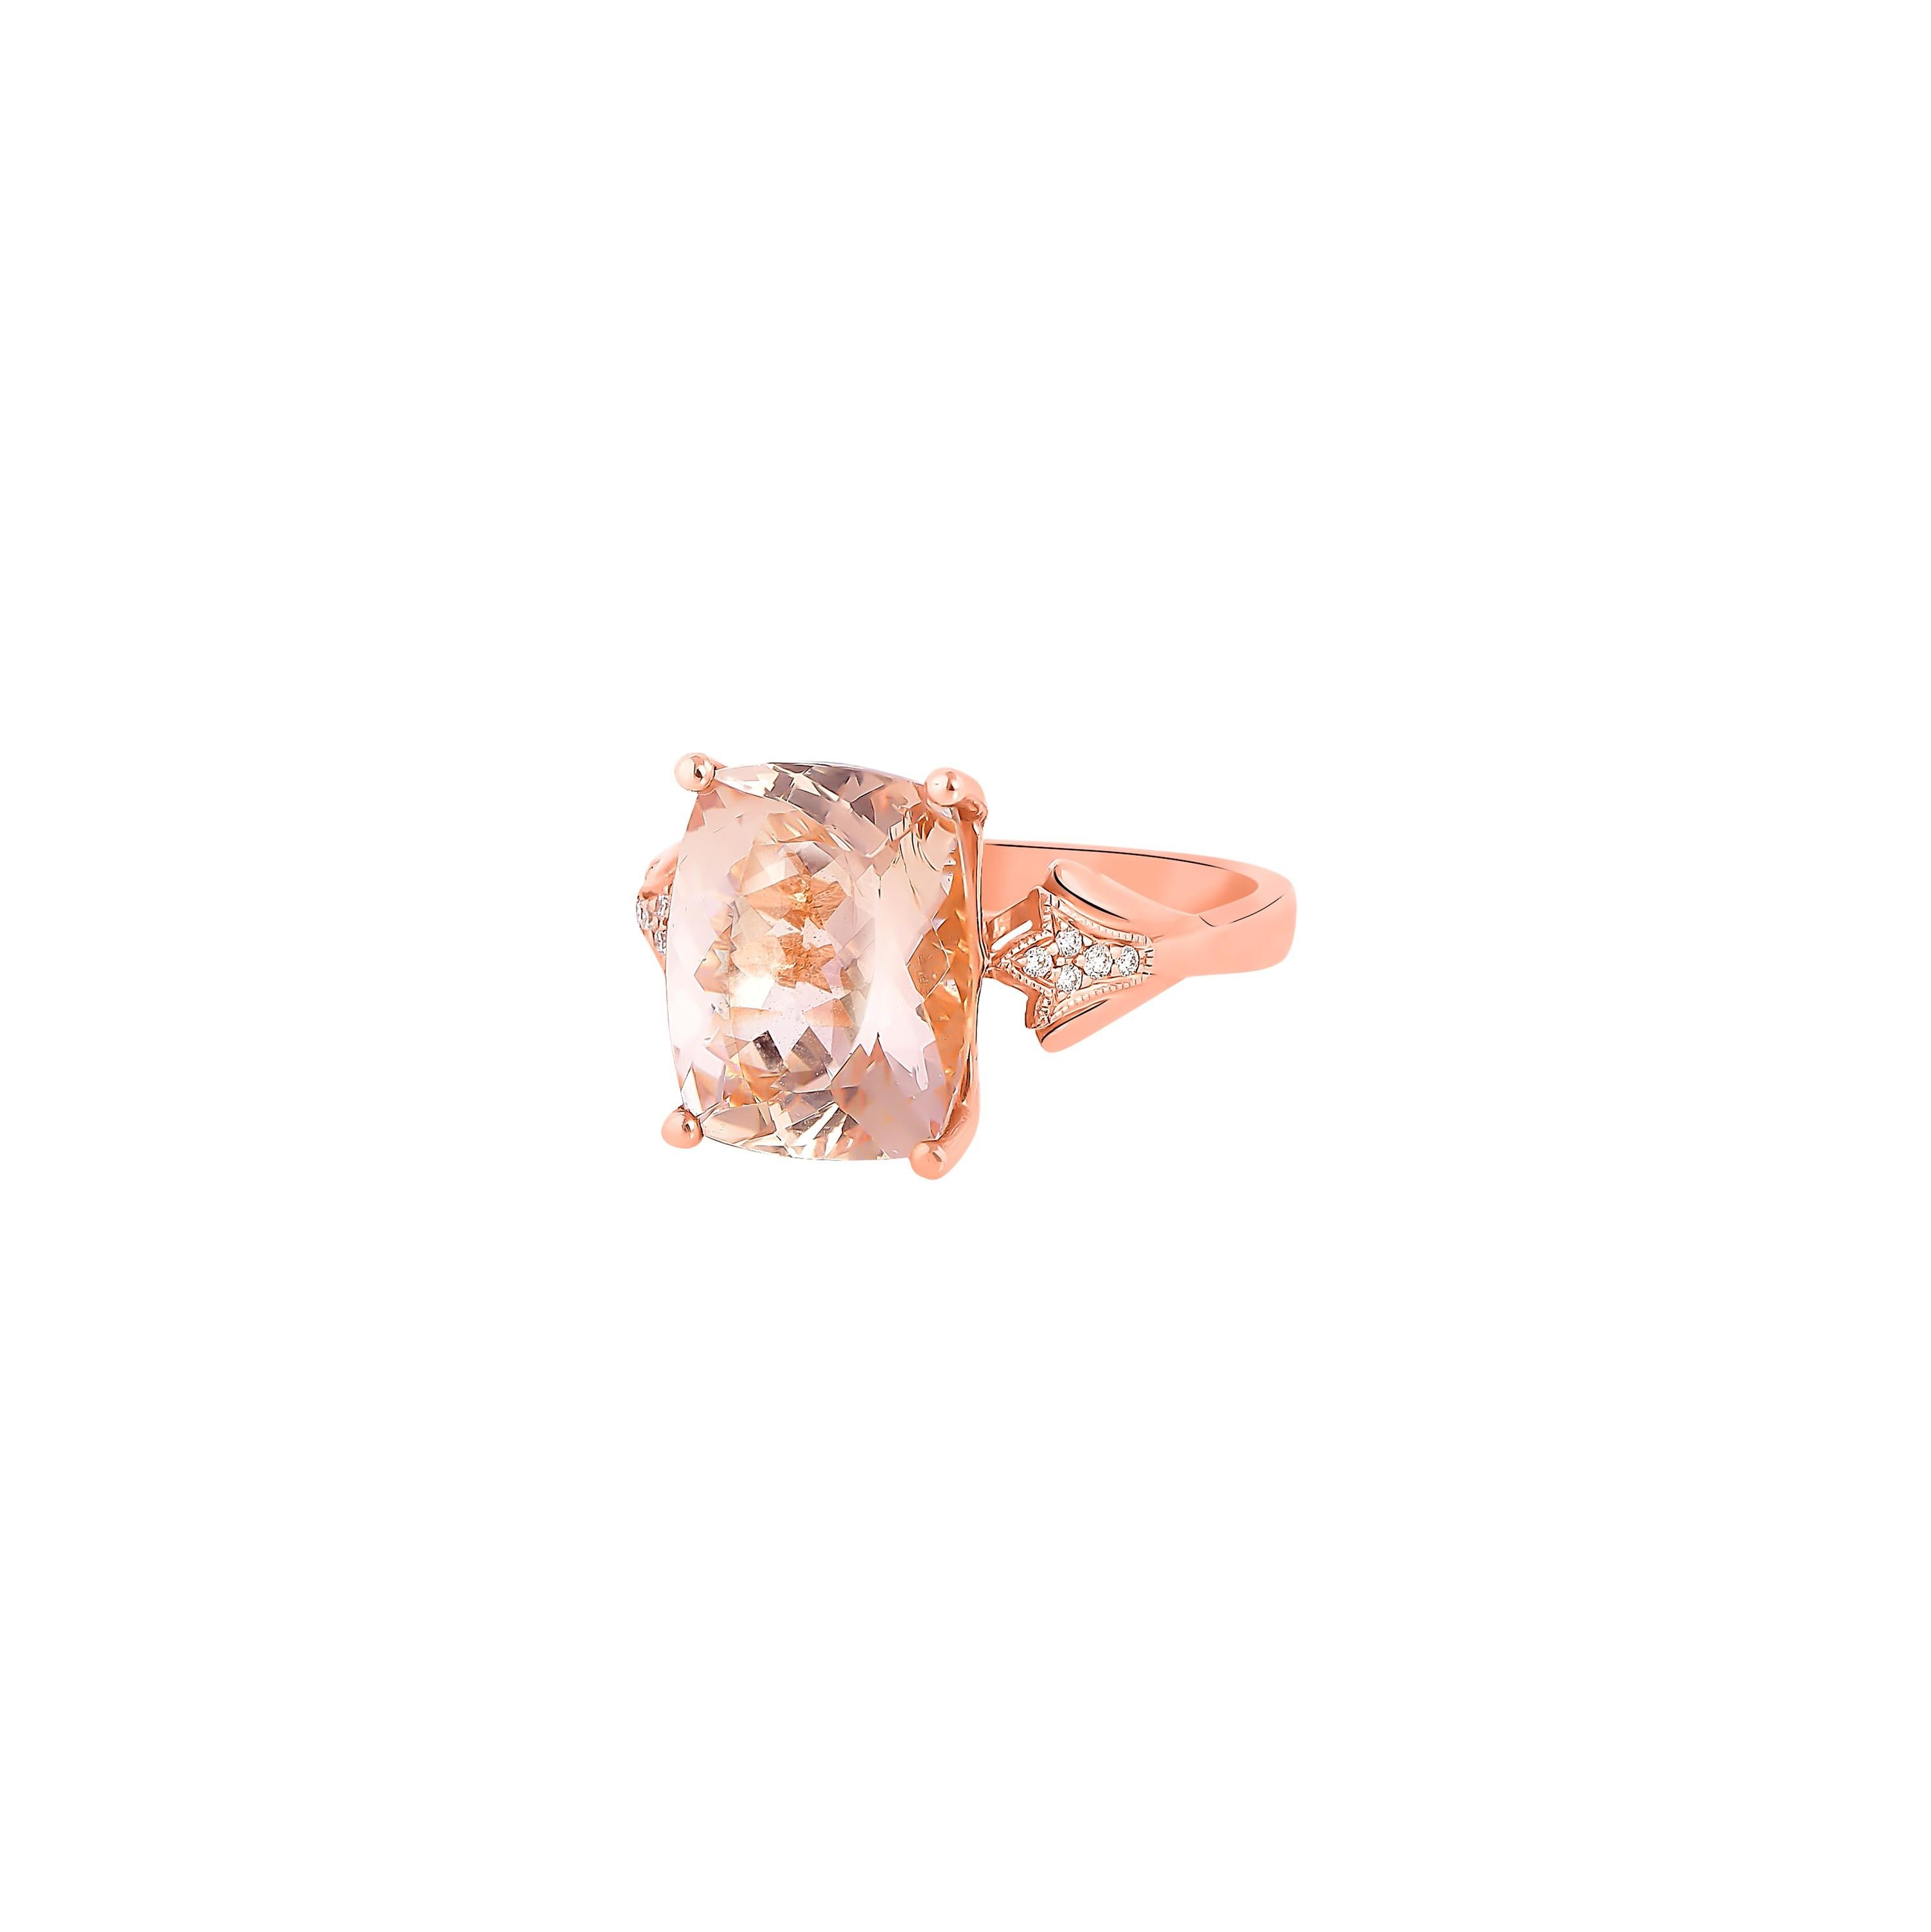 4.4 carat diamond ring